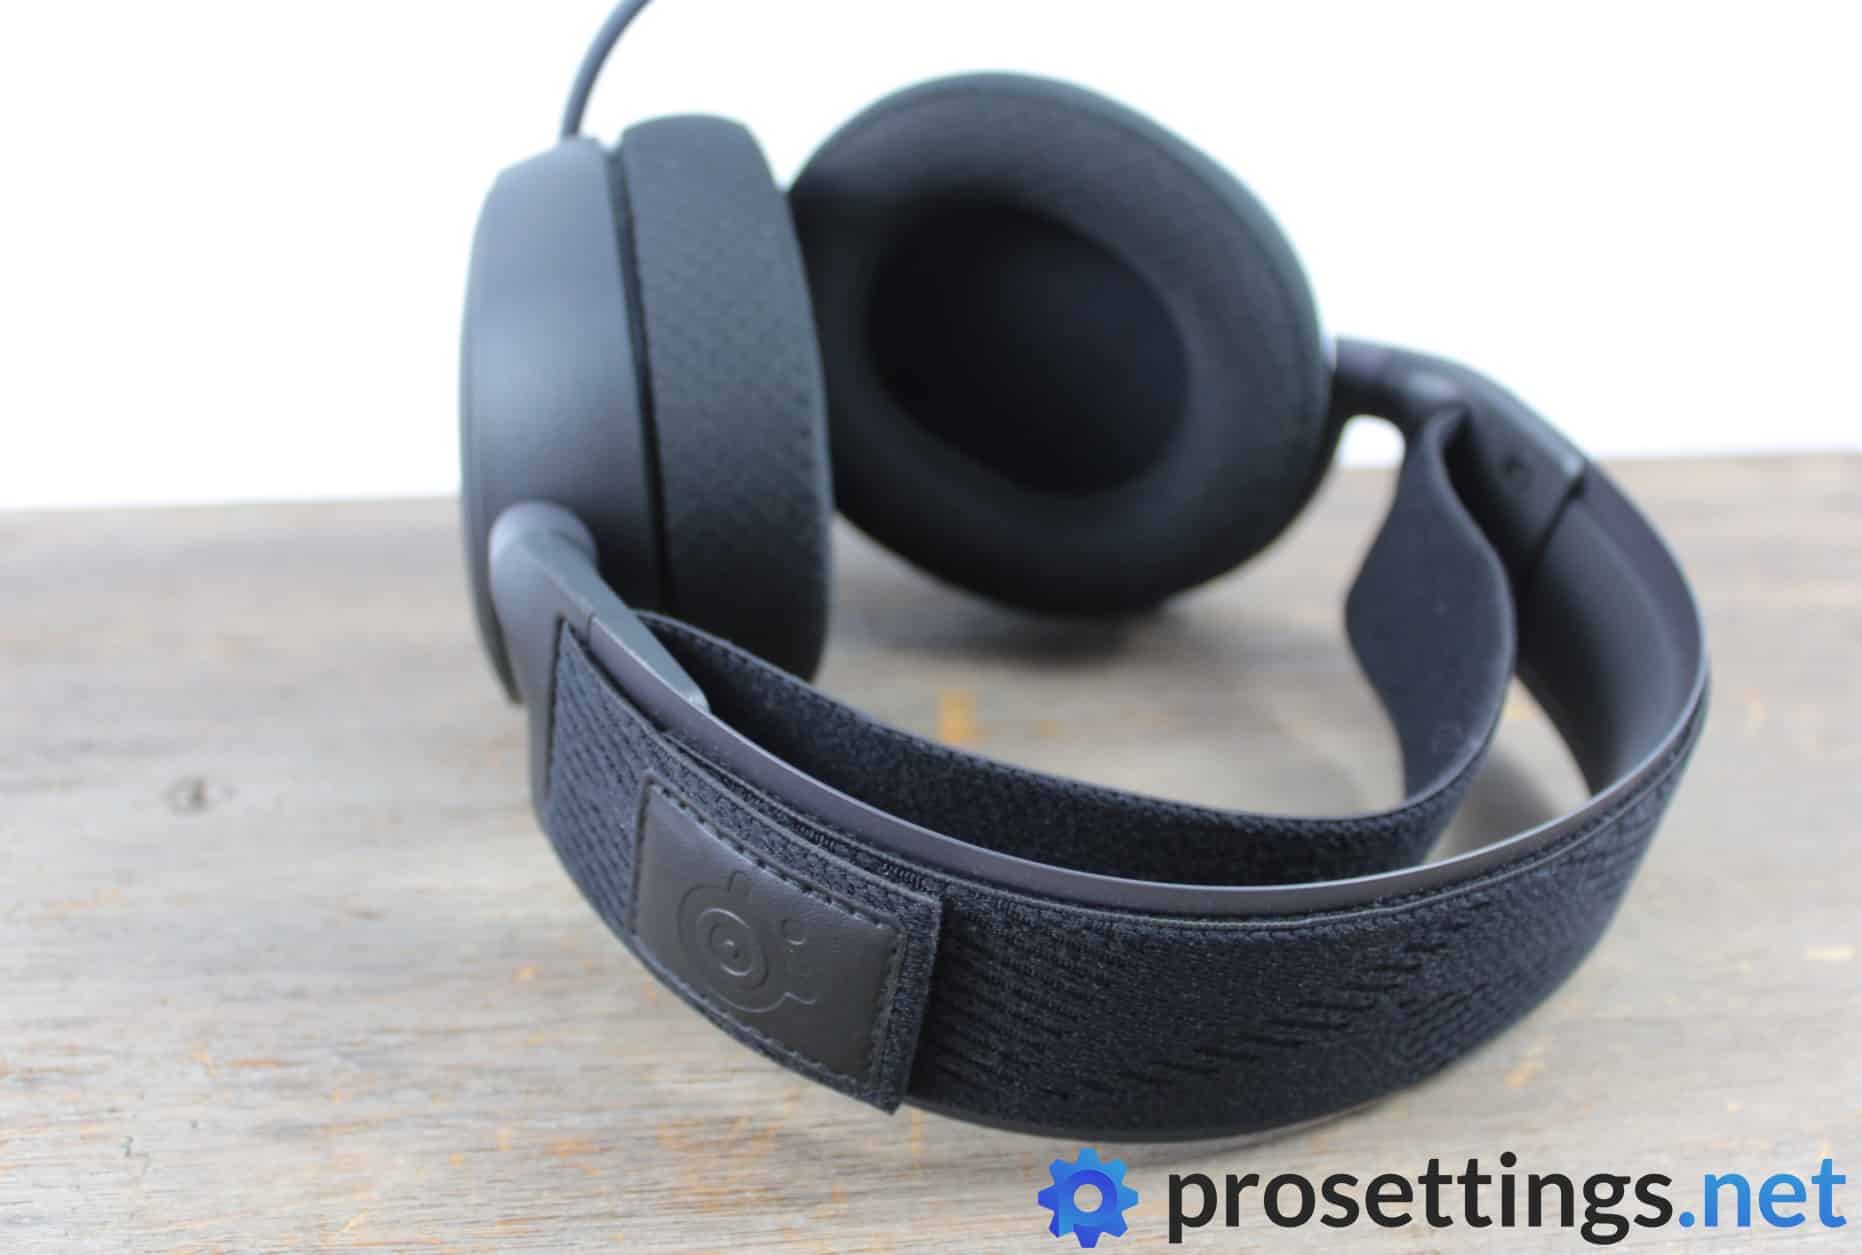 SteelSeries Arctis Pro Review Headset